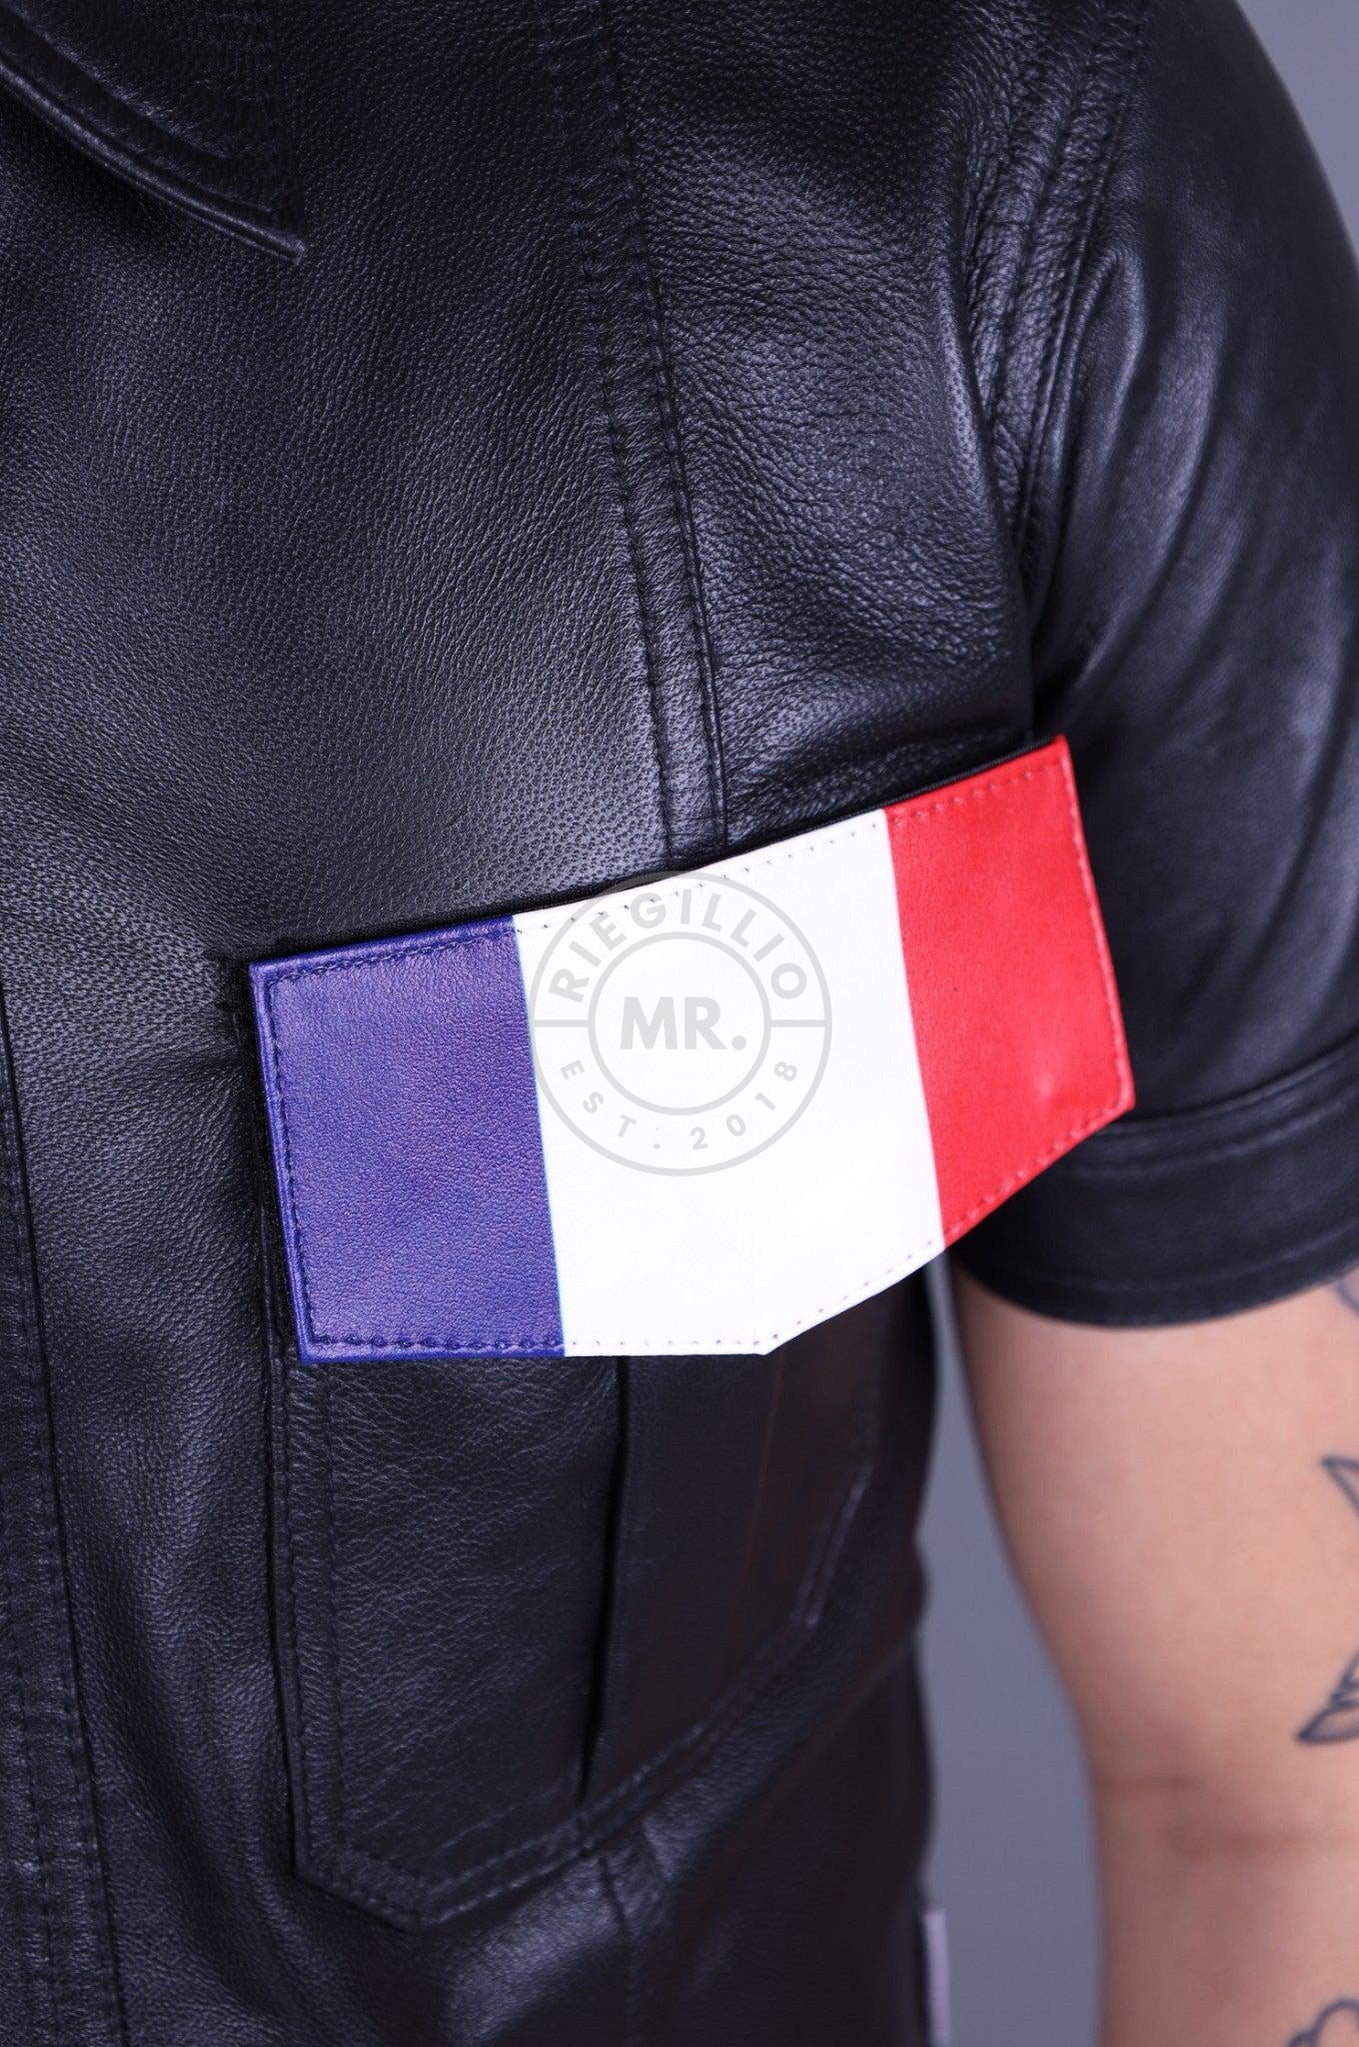 Velcro Patch - France Flag at MR. Riegillio